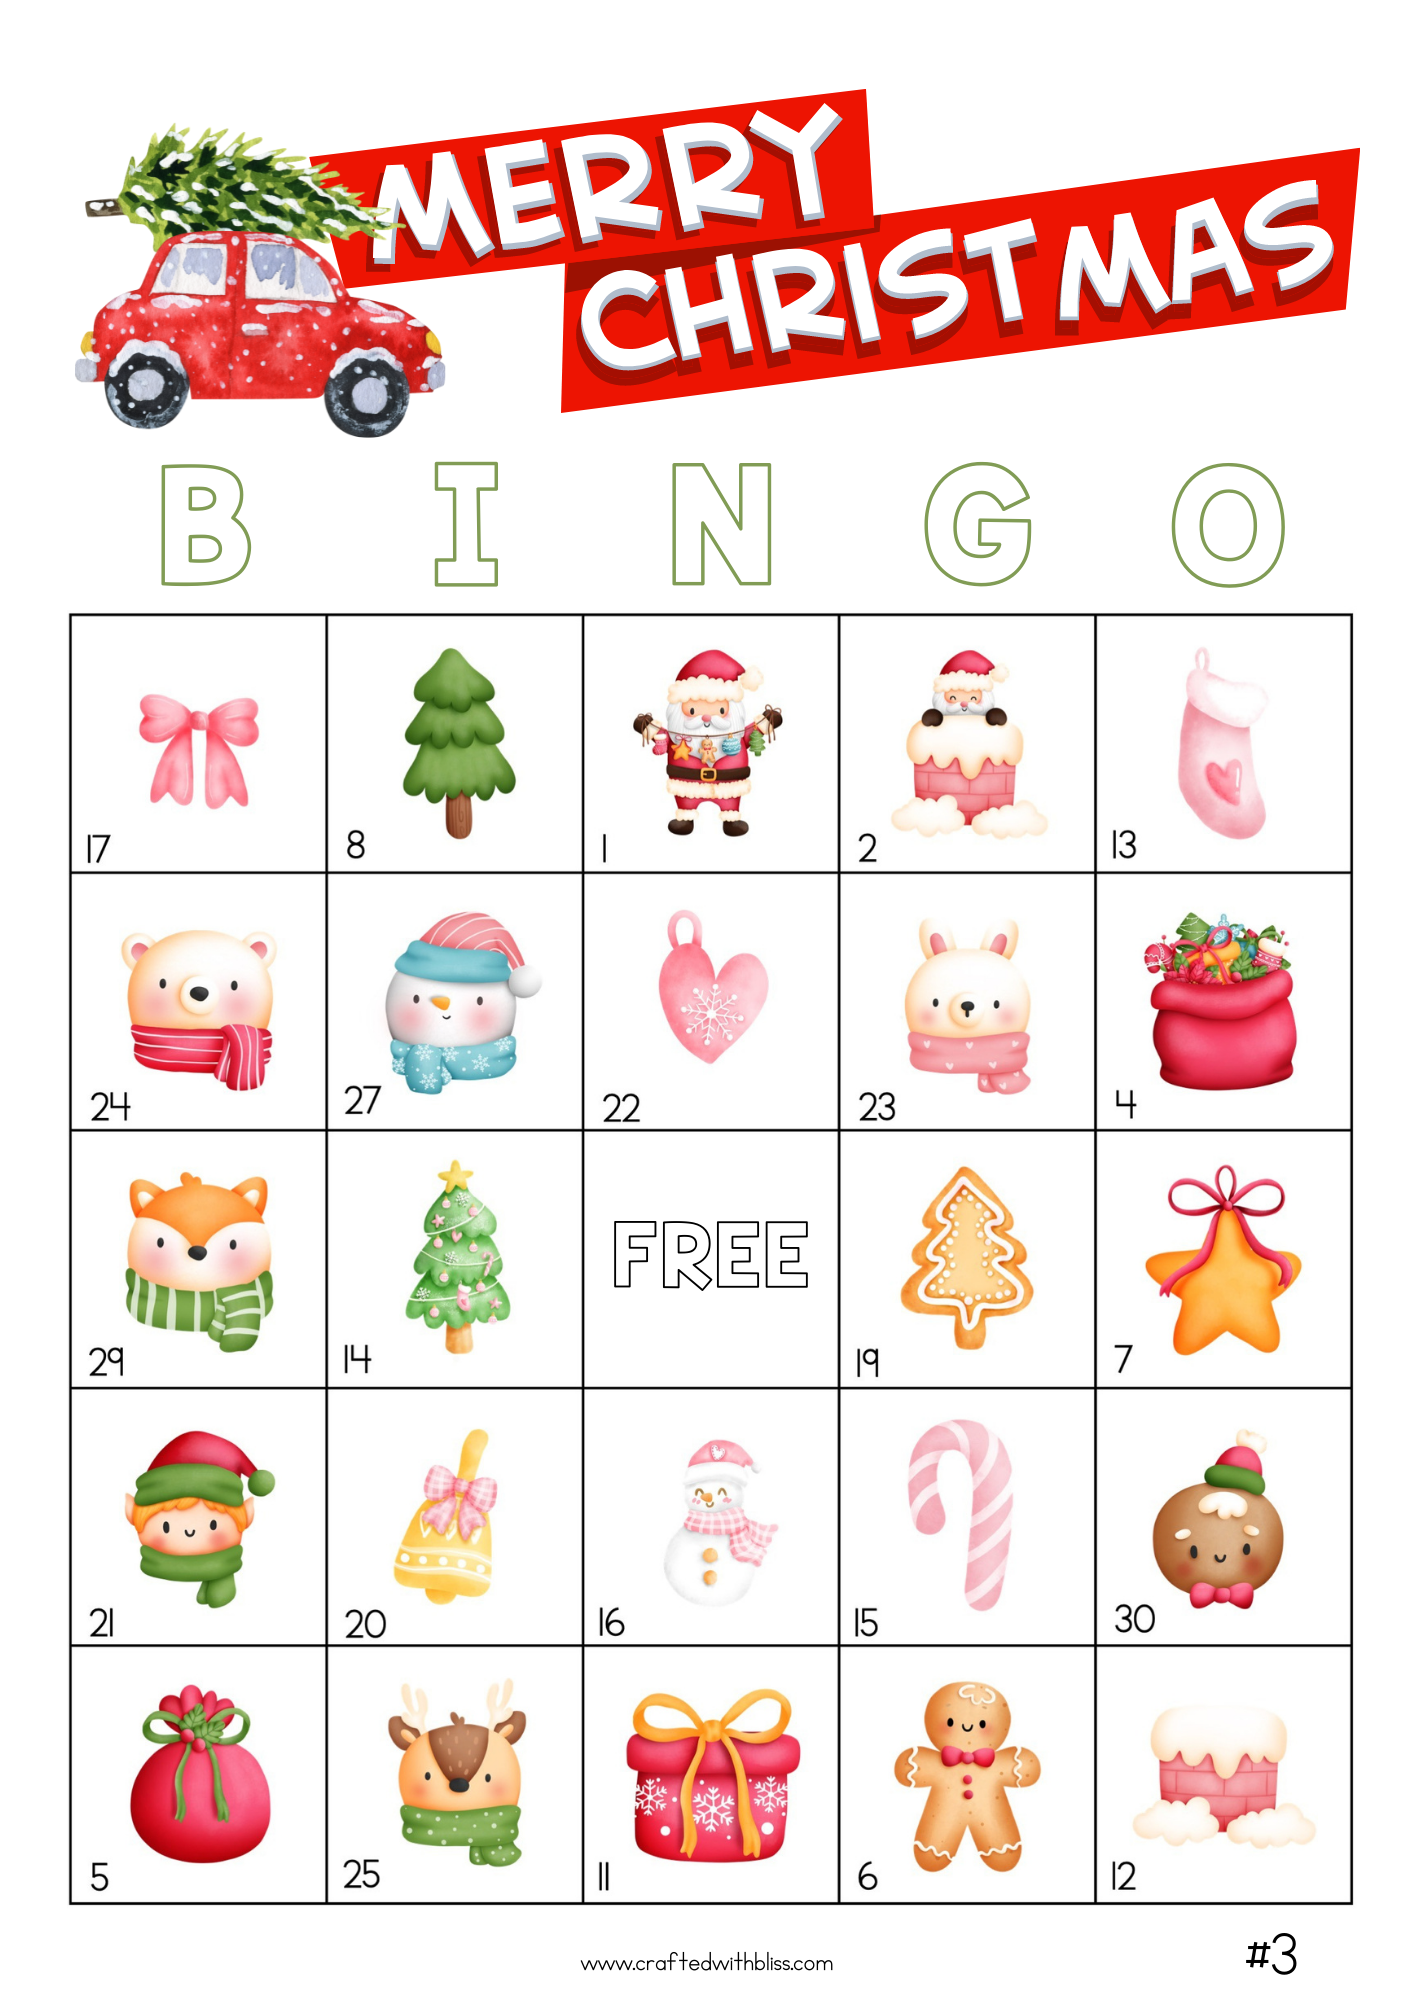 50 Christmas Bingo Cards (5x5)